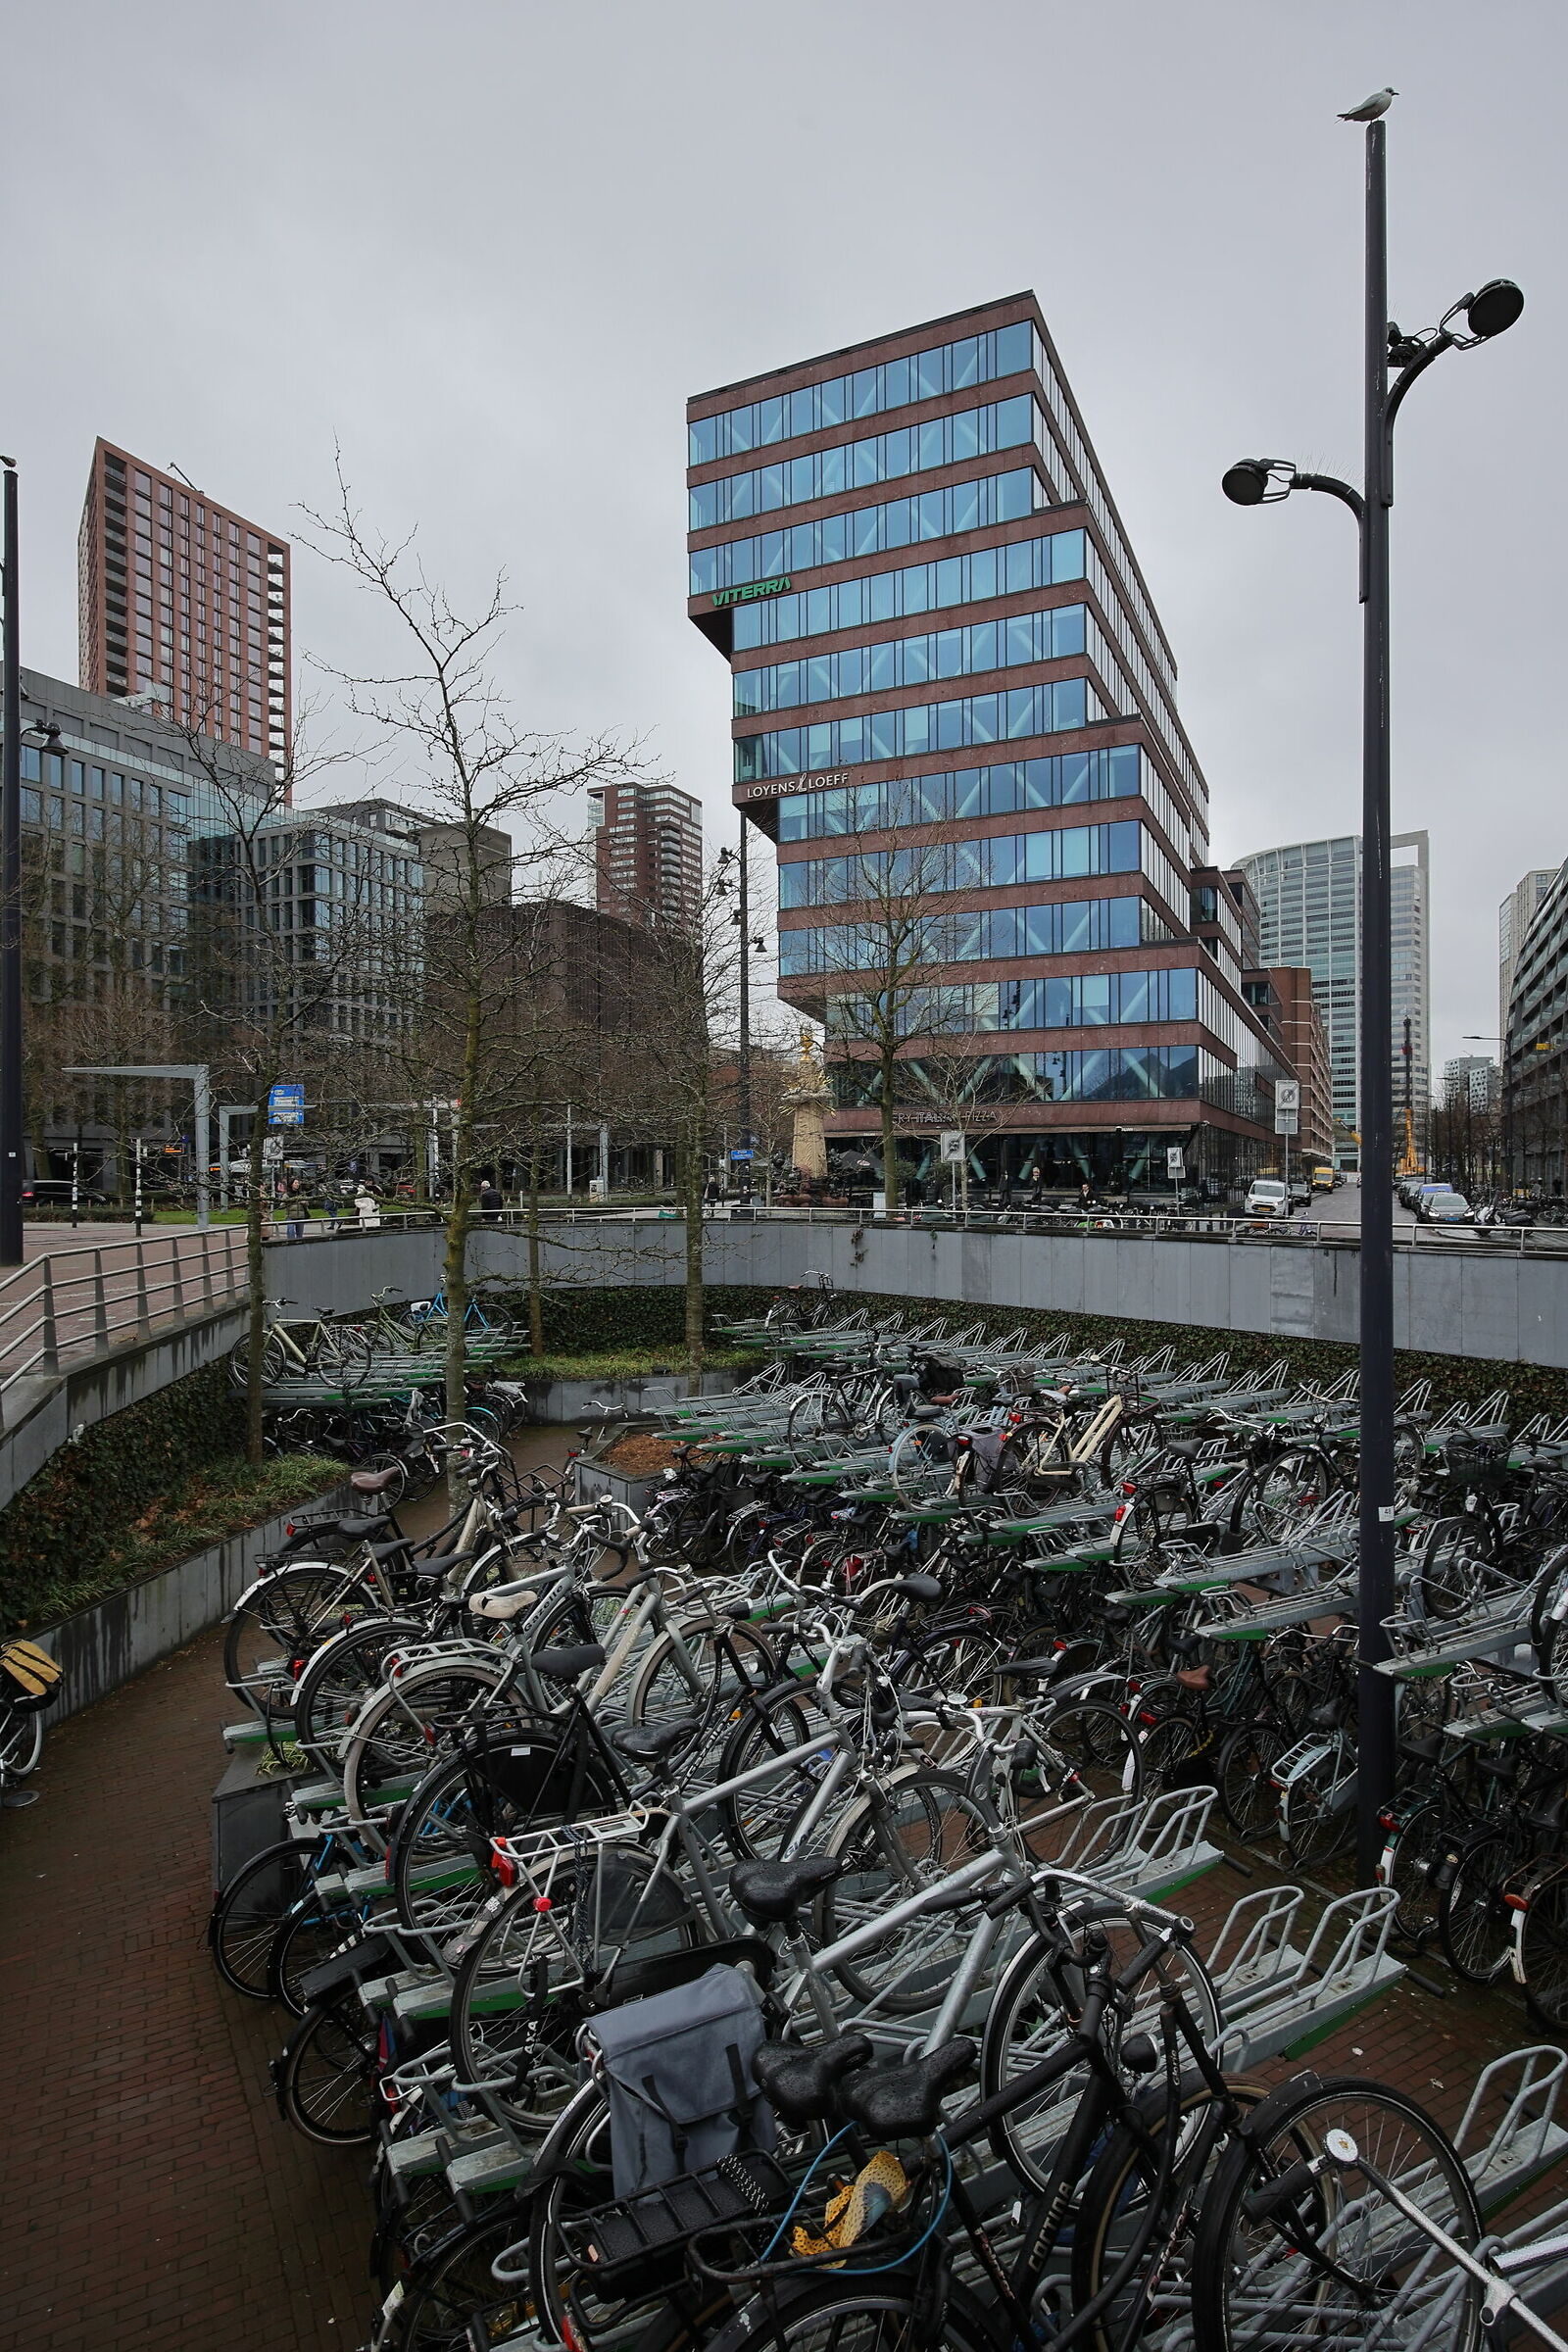 Rotterdam - Modern architecture and cycling...